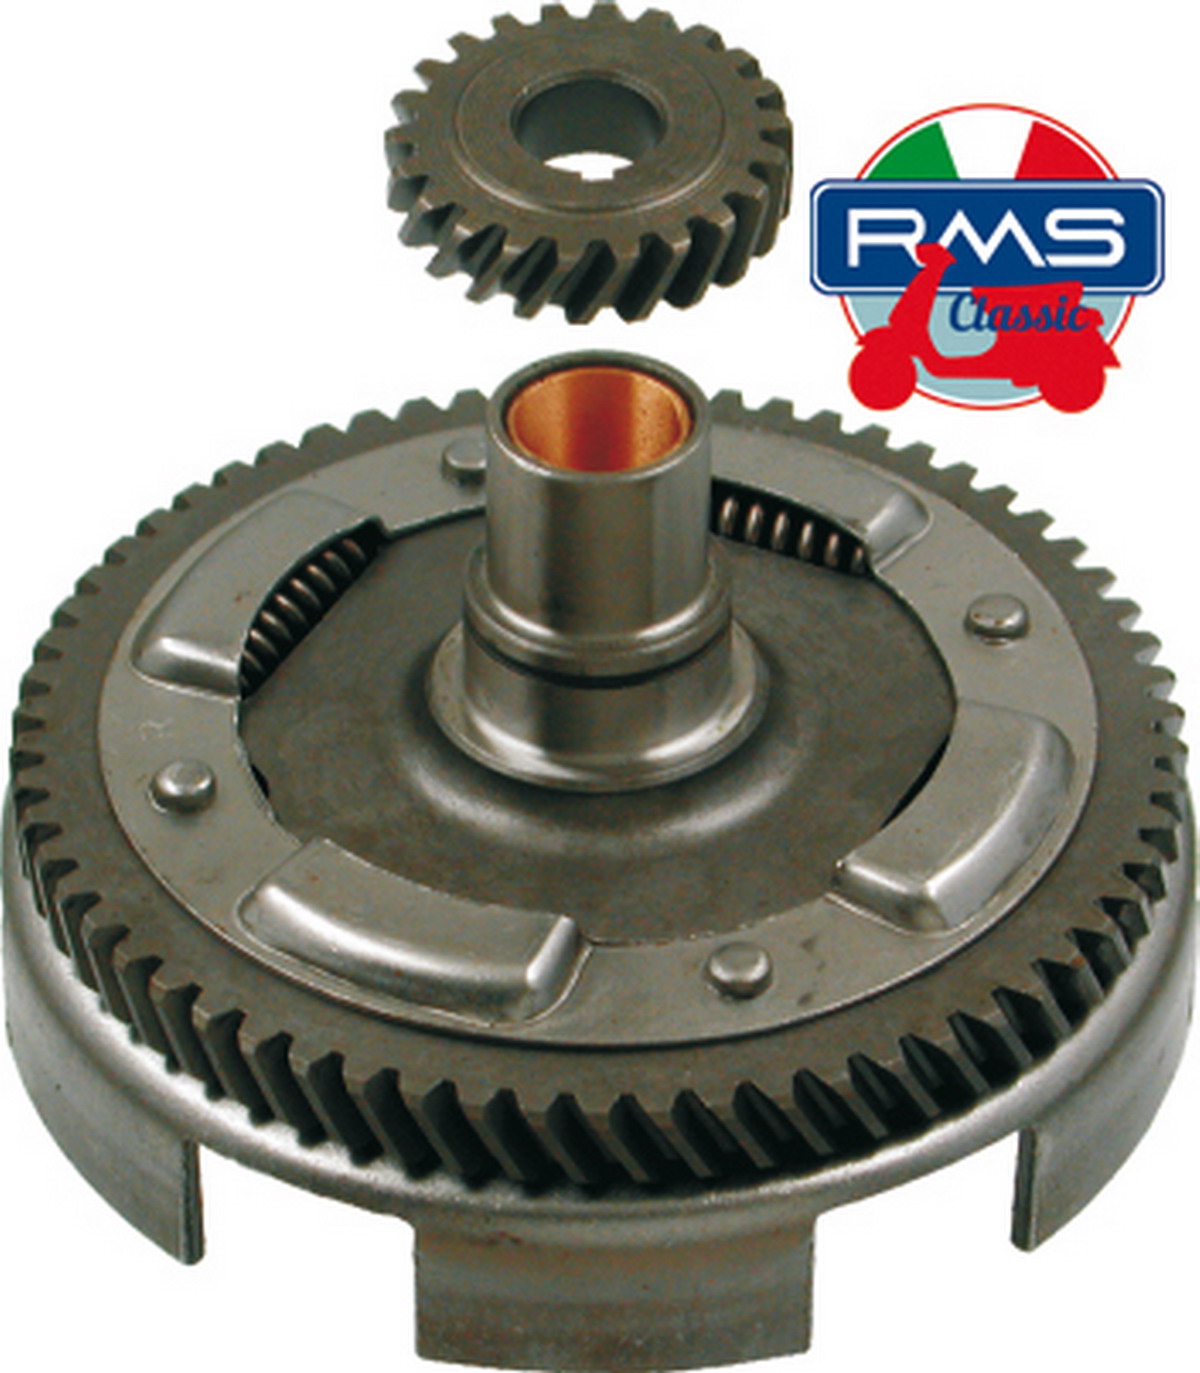 Obrázek produktu Gear clutch RMS 100240140